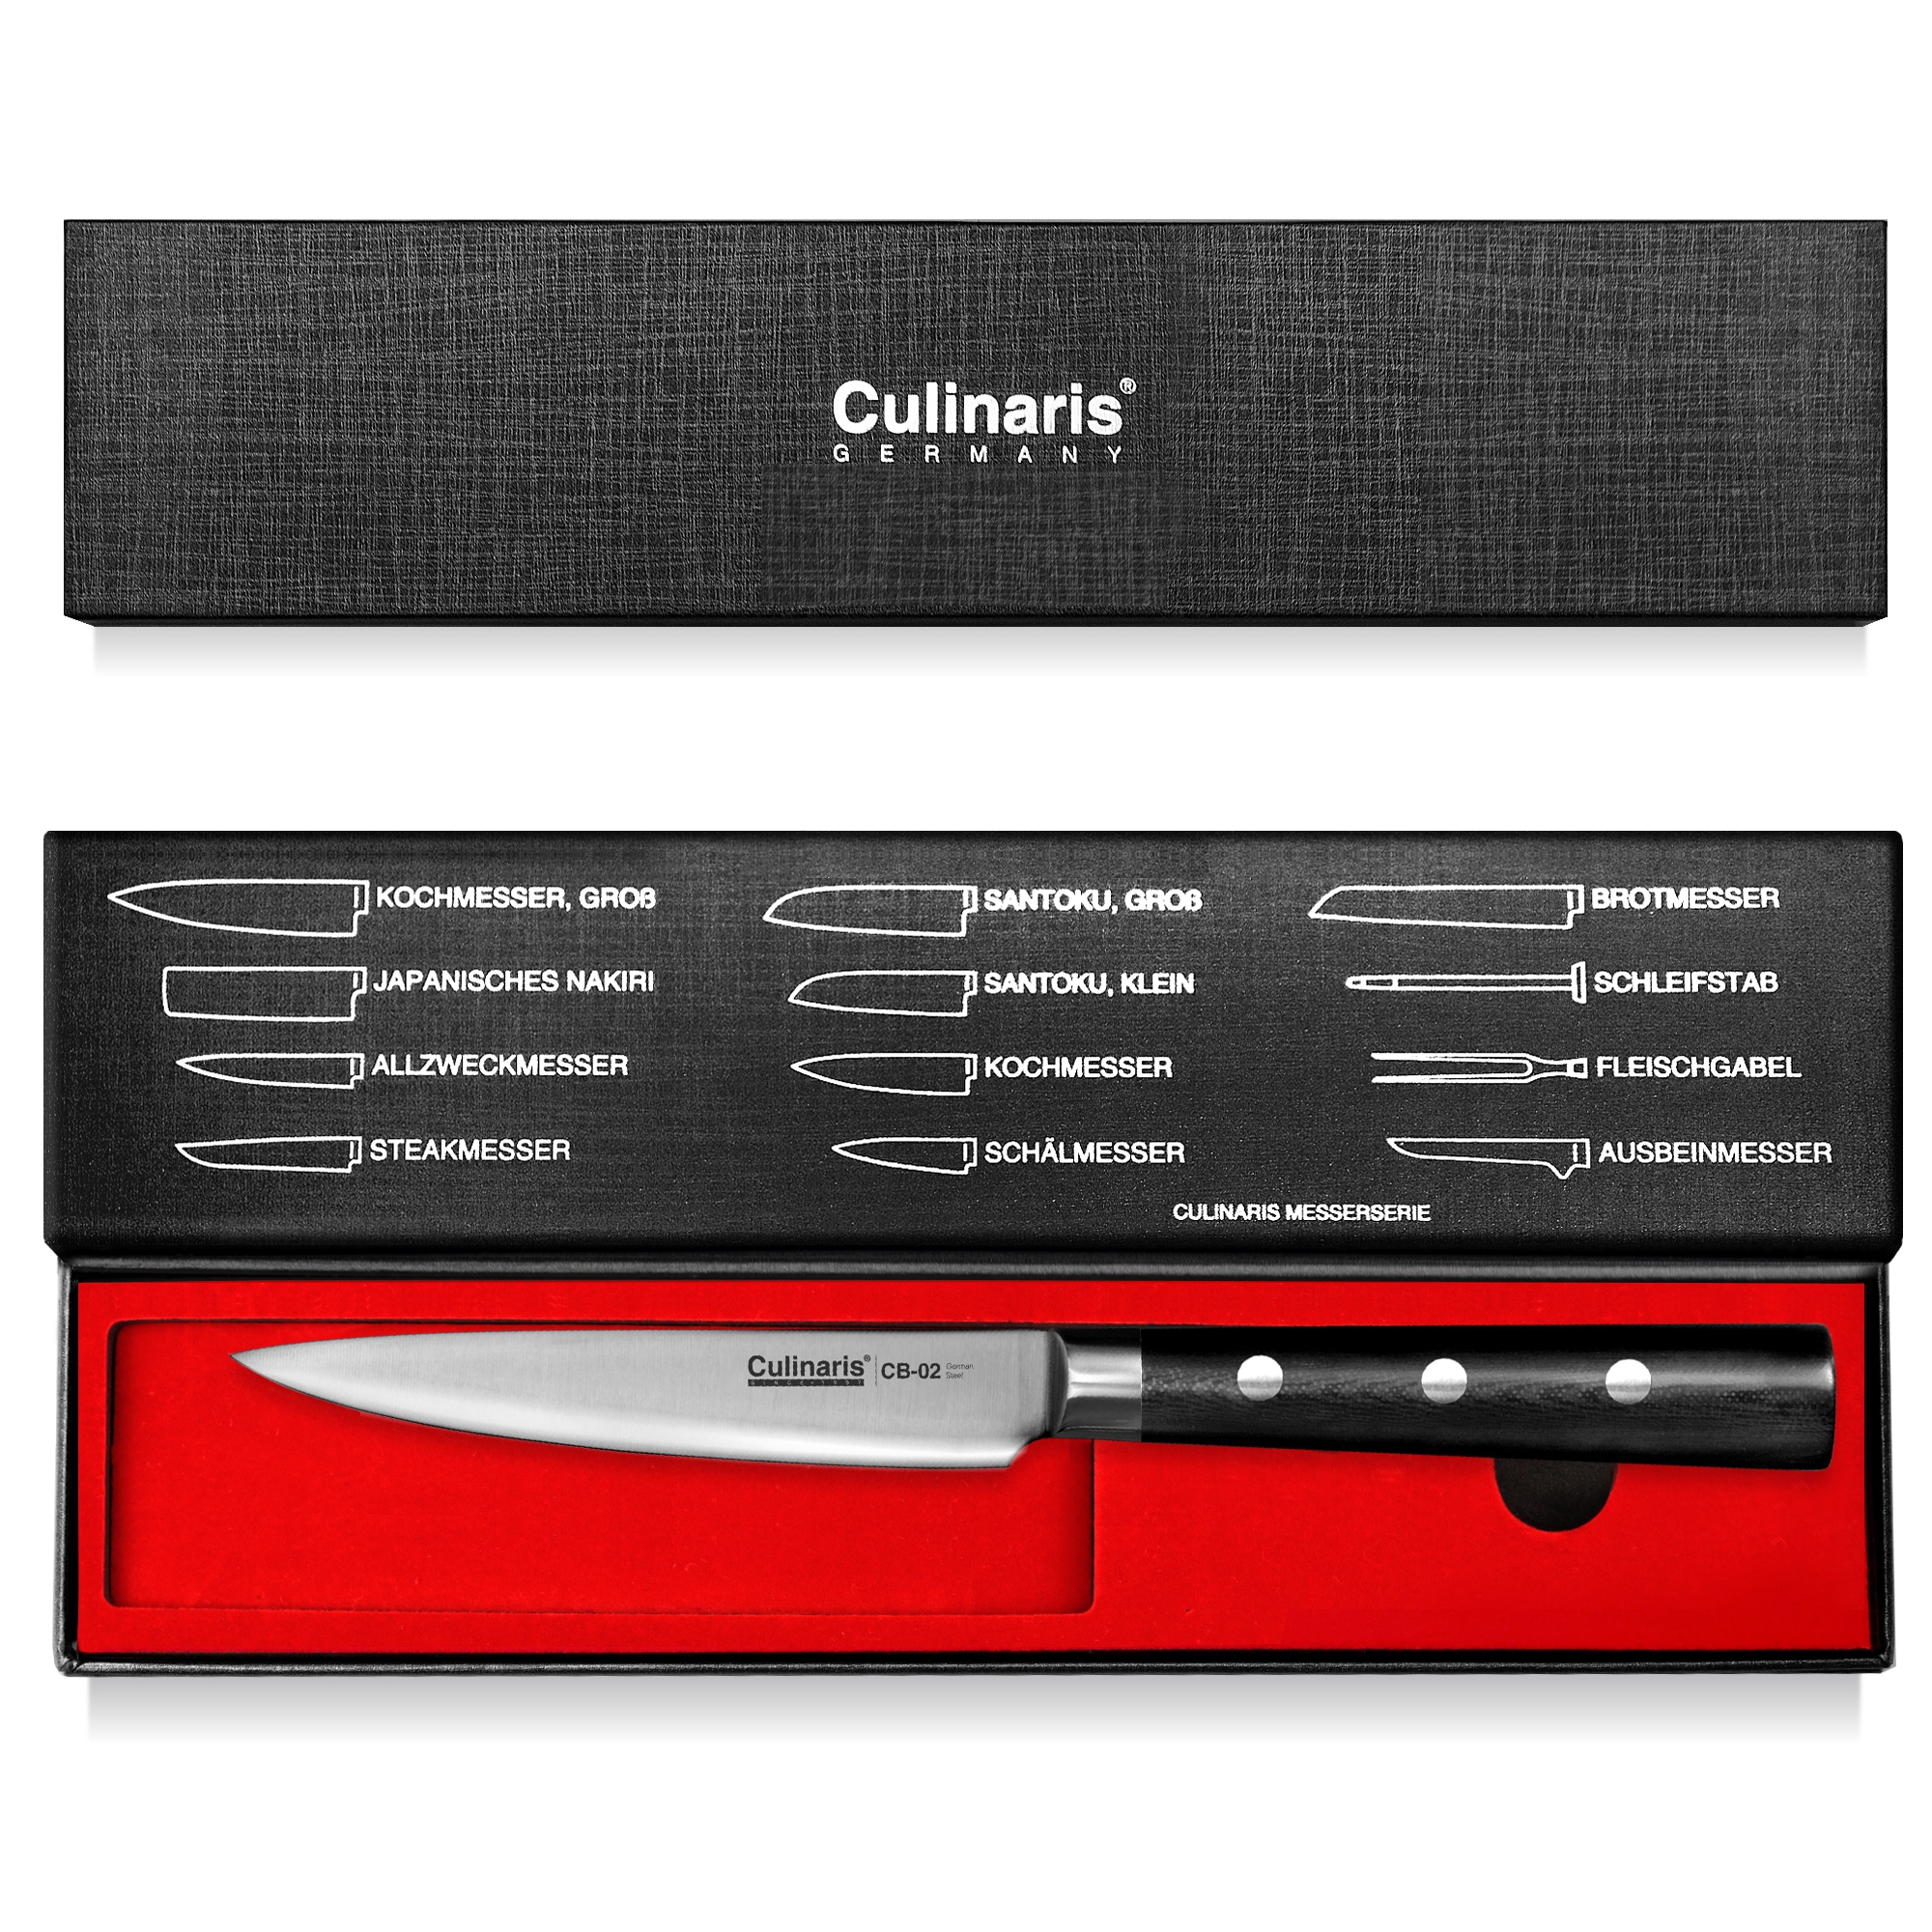 Culinaris - Messer-Set - Kochmesser CB-08 + Alzweckmesser CB-02 + Ausbeinmesser CB-05 + Fleischgabel CB-11 + Messerblock CB-13